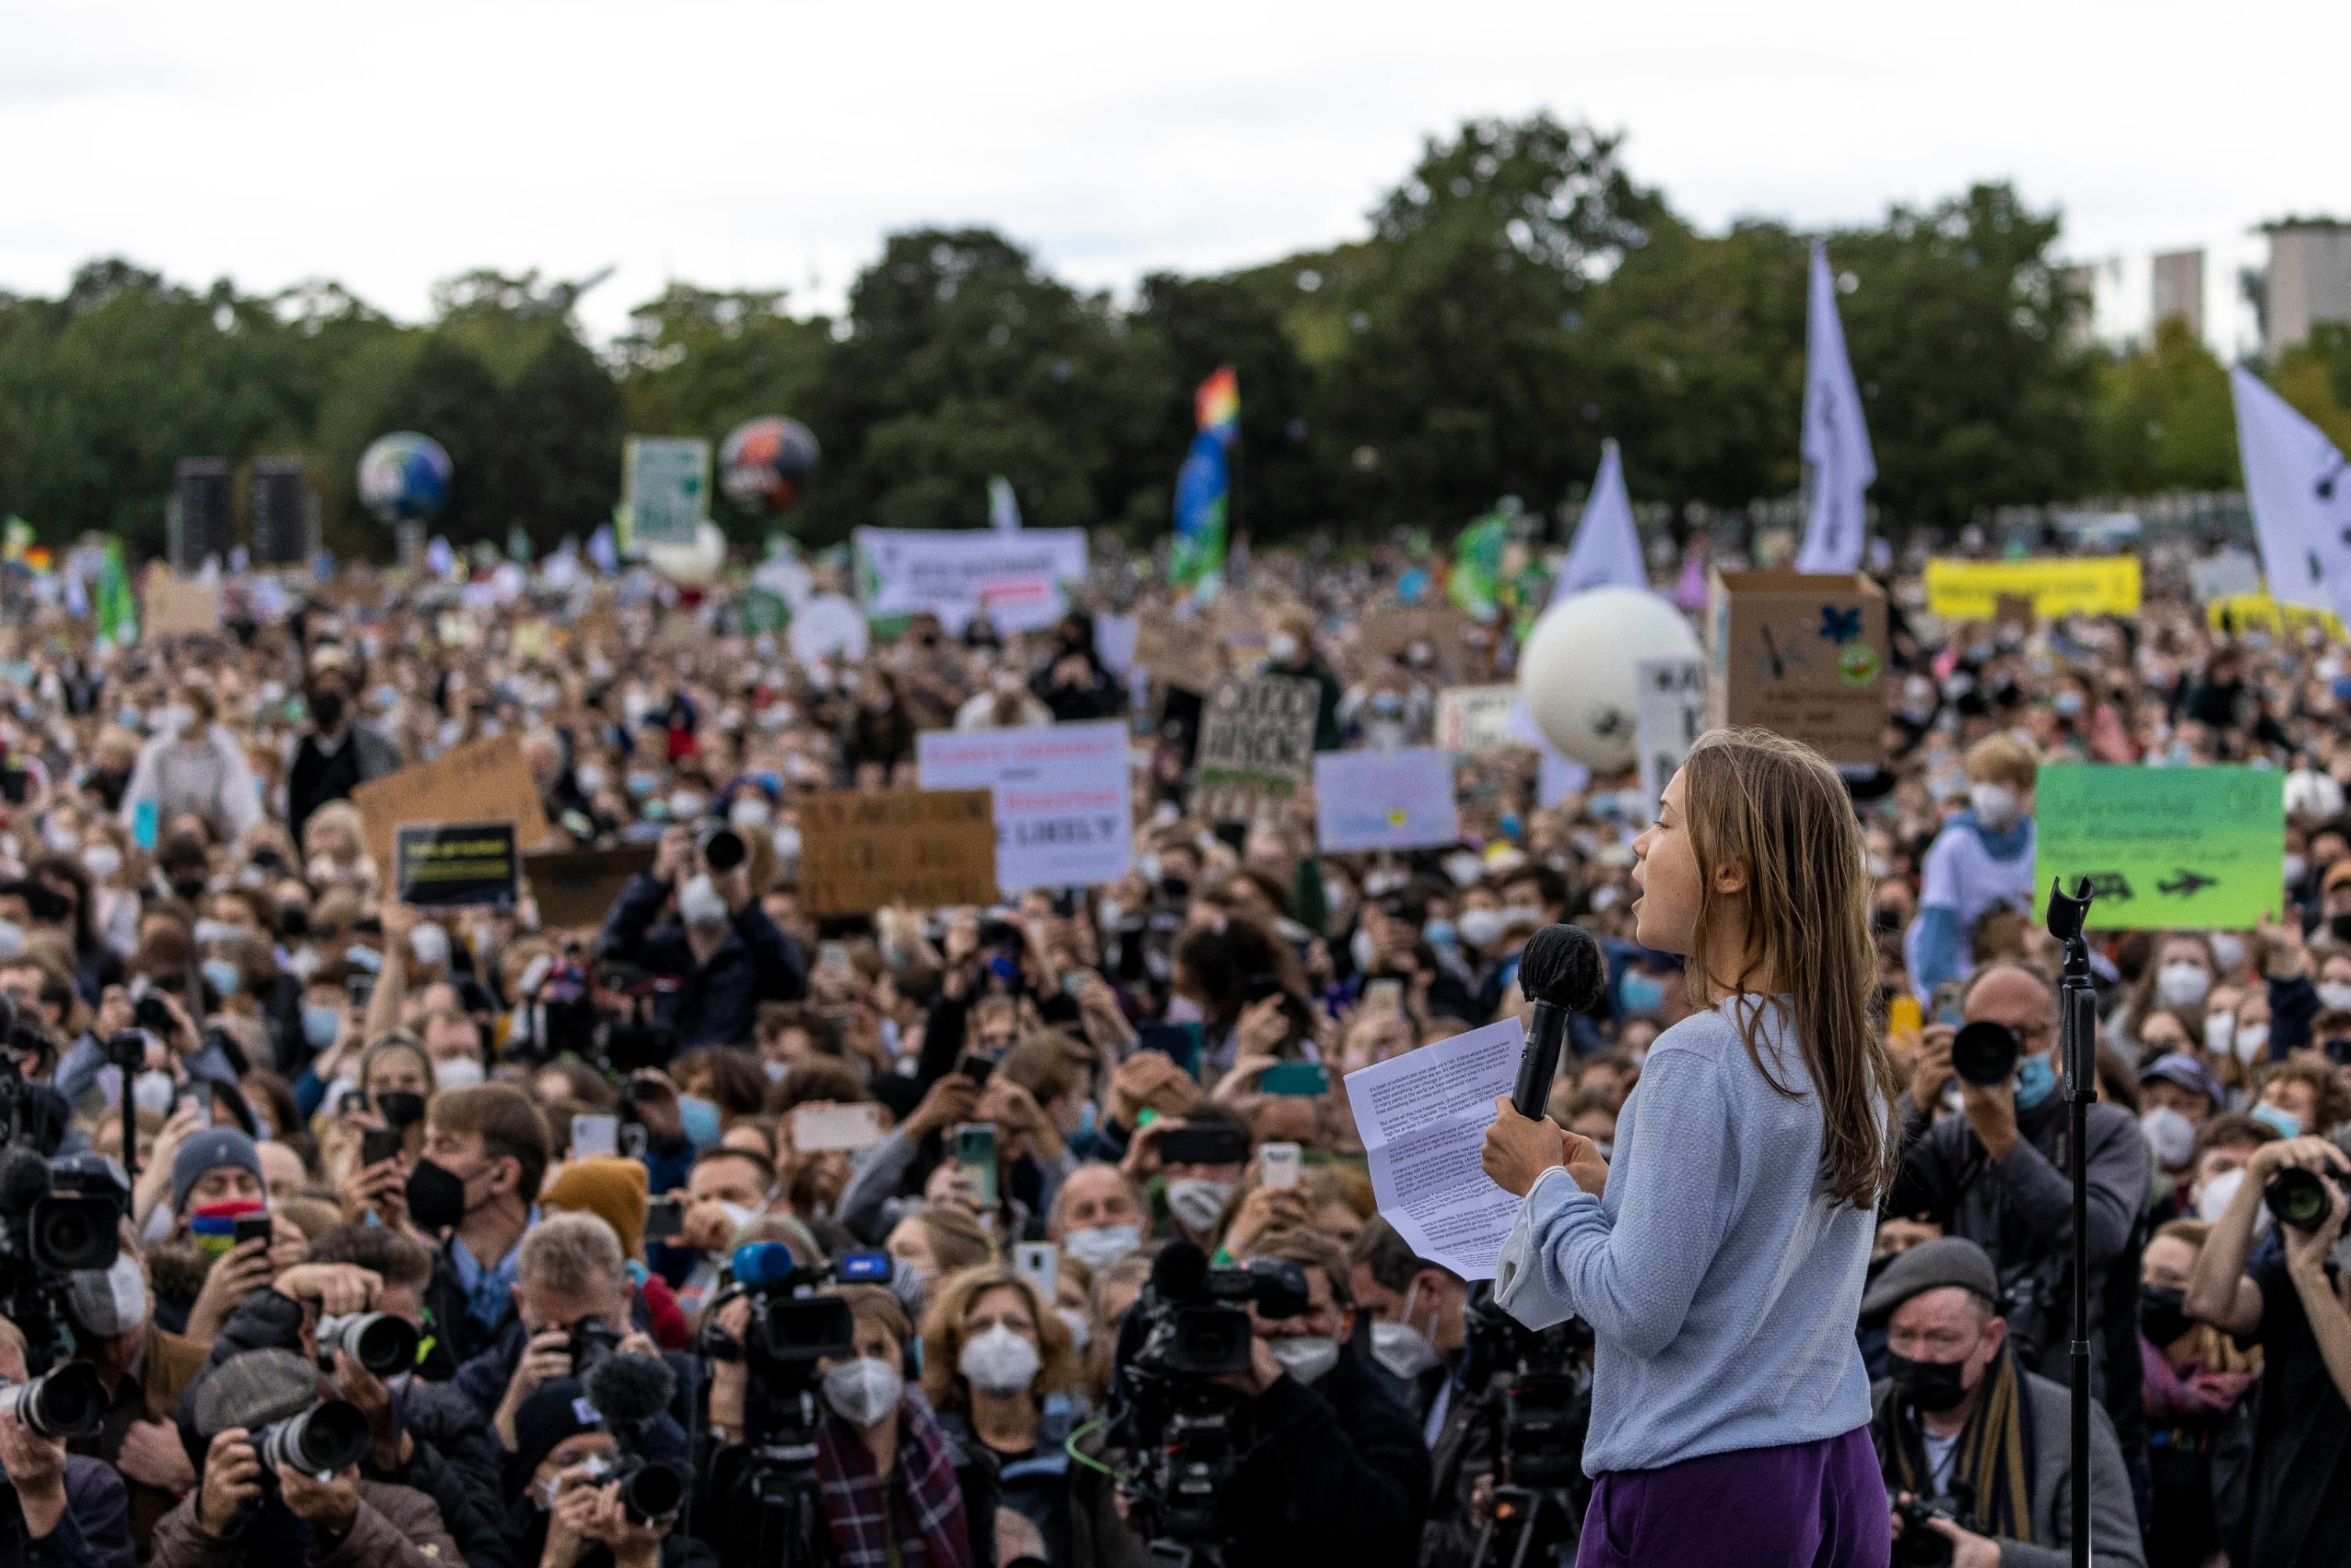 Greta Thunberg speaks during a climate strike in Germany